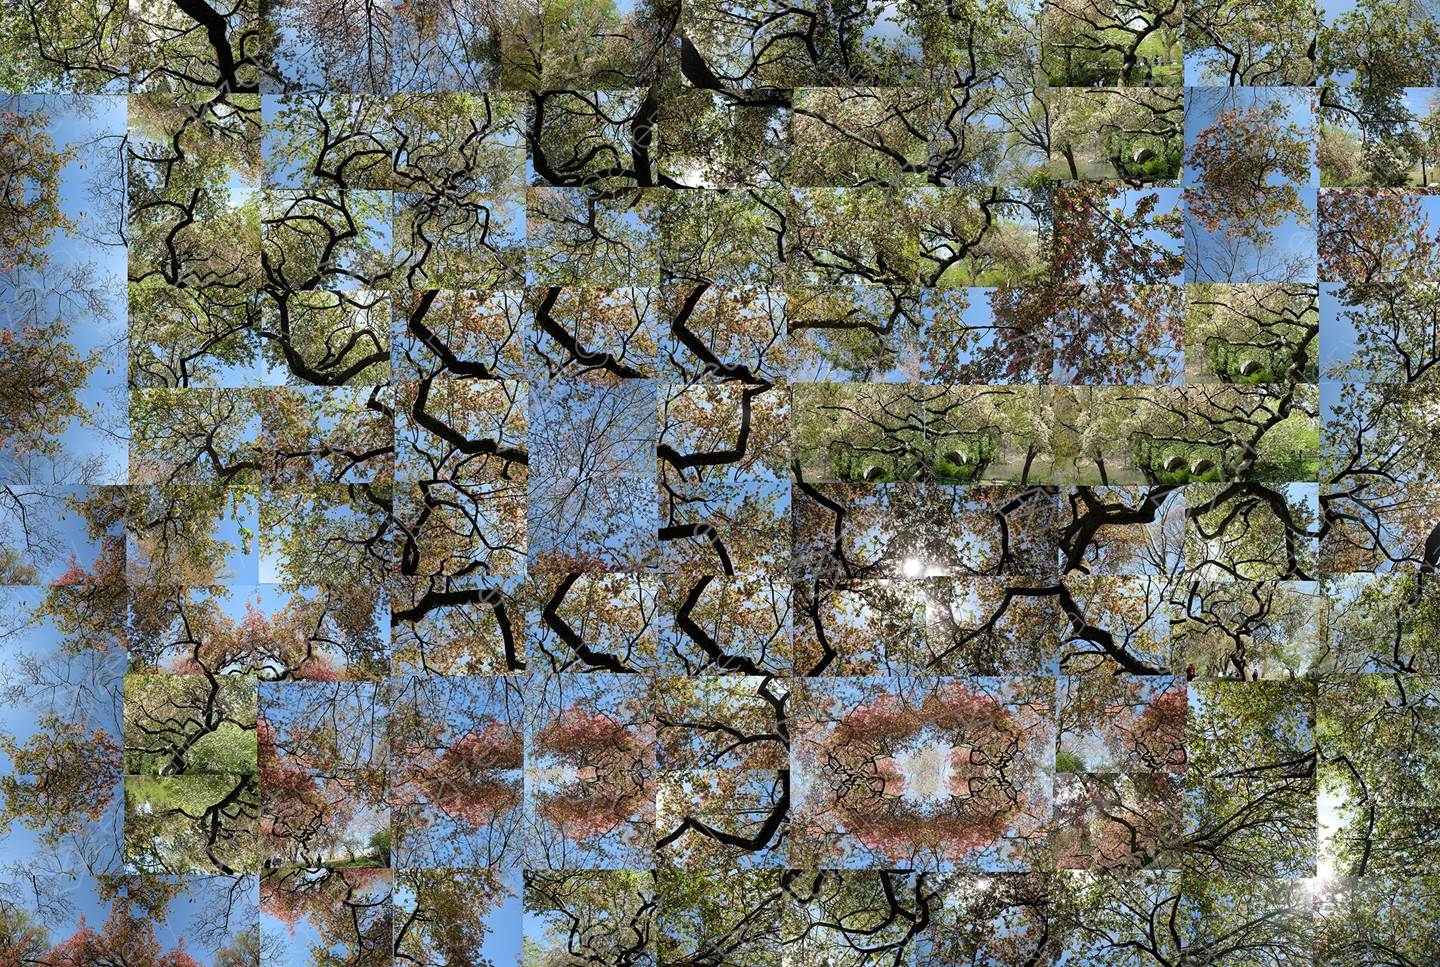 Spring - A Stroll By The Weeping Cherry Tree, original Naturaleza Digital Fotografía de Shimon and Tammar Rothstein 